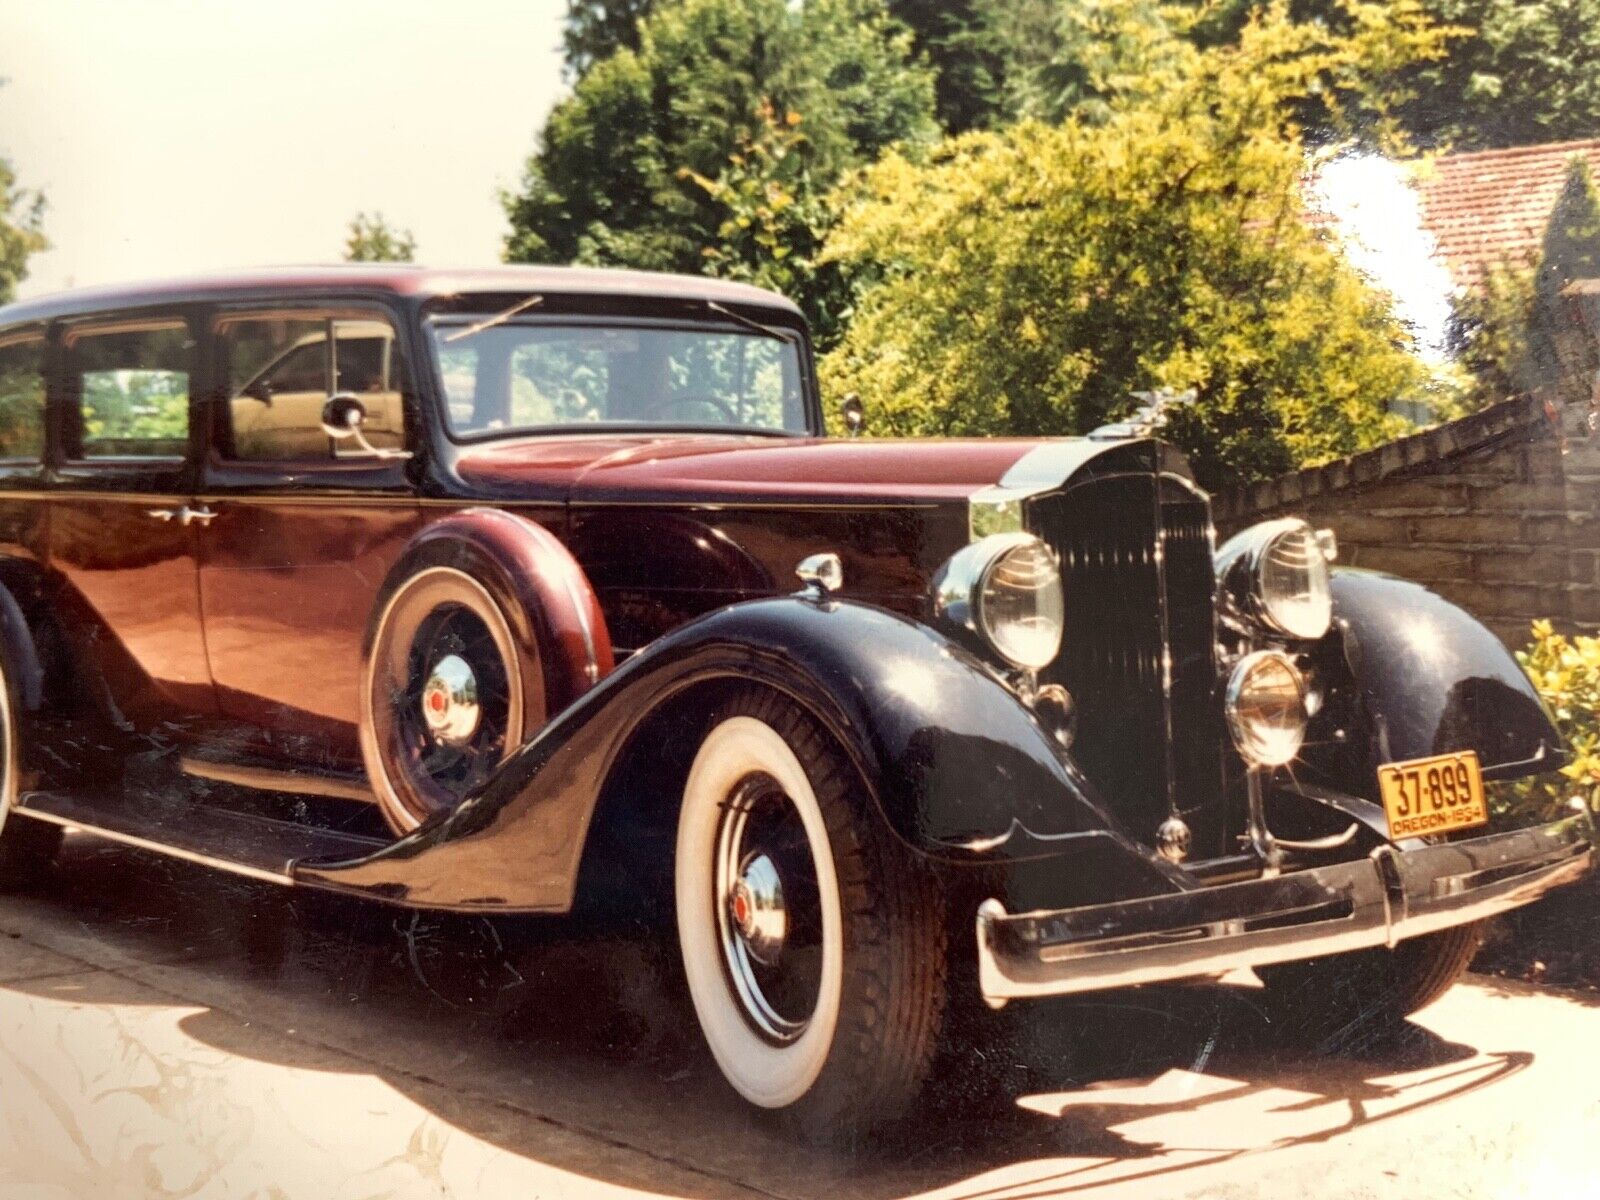 AeB) Photograph Of A Classic 1934 Packard Twelve Collectors Car 4x6 Artistic